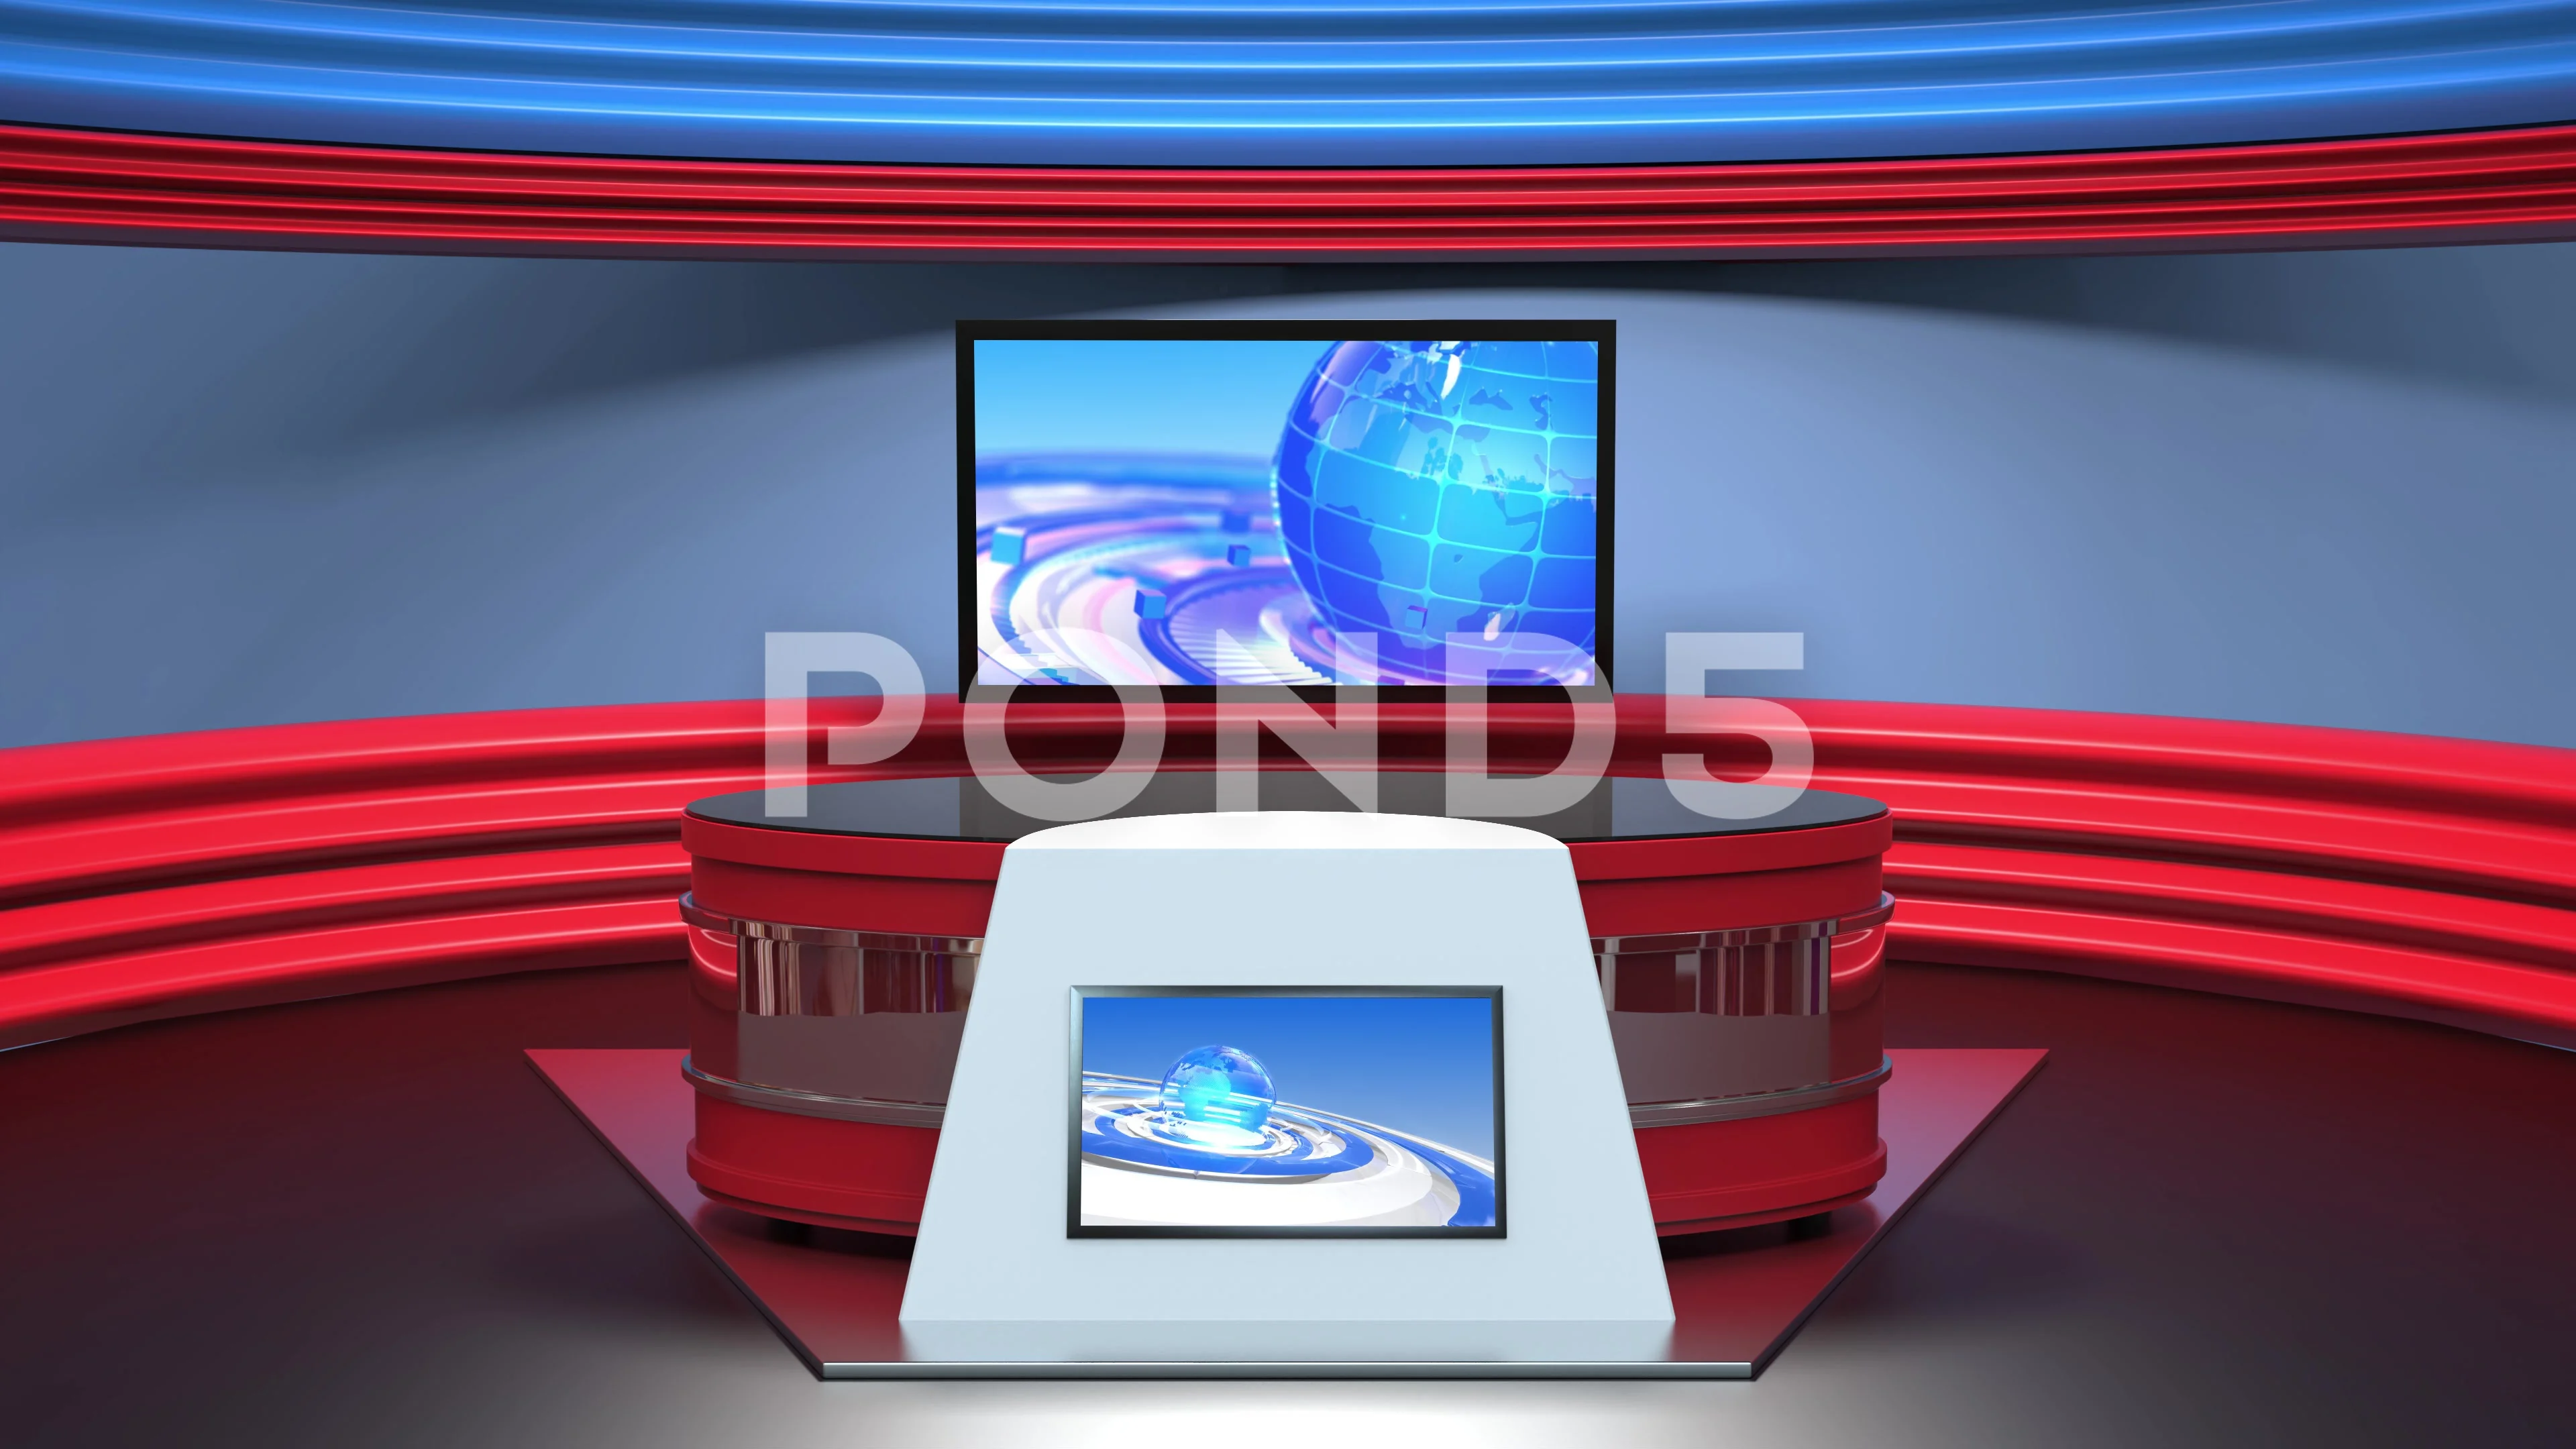 3D Virtual News Studio Background Loop | Stock Video | Pond5